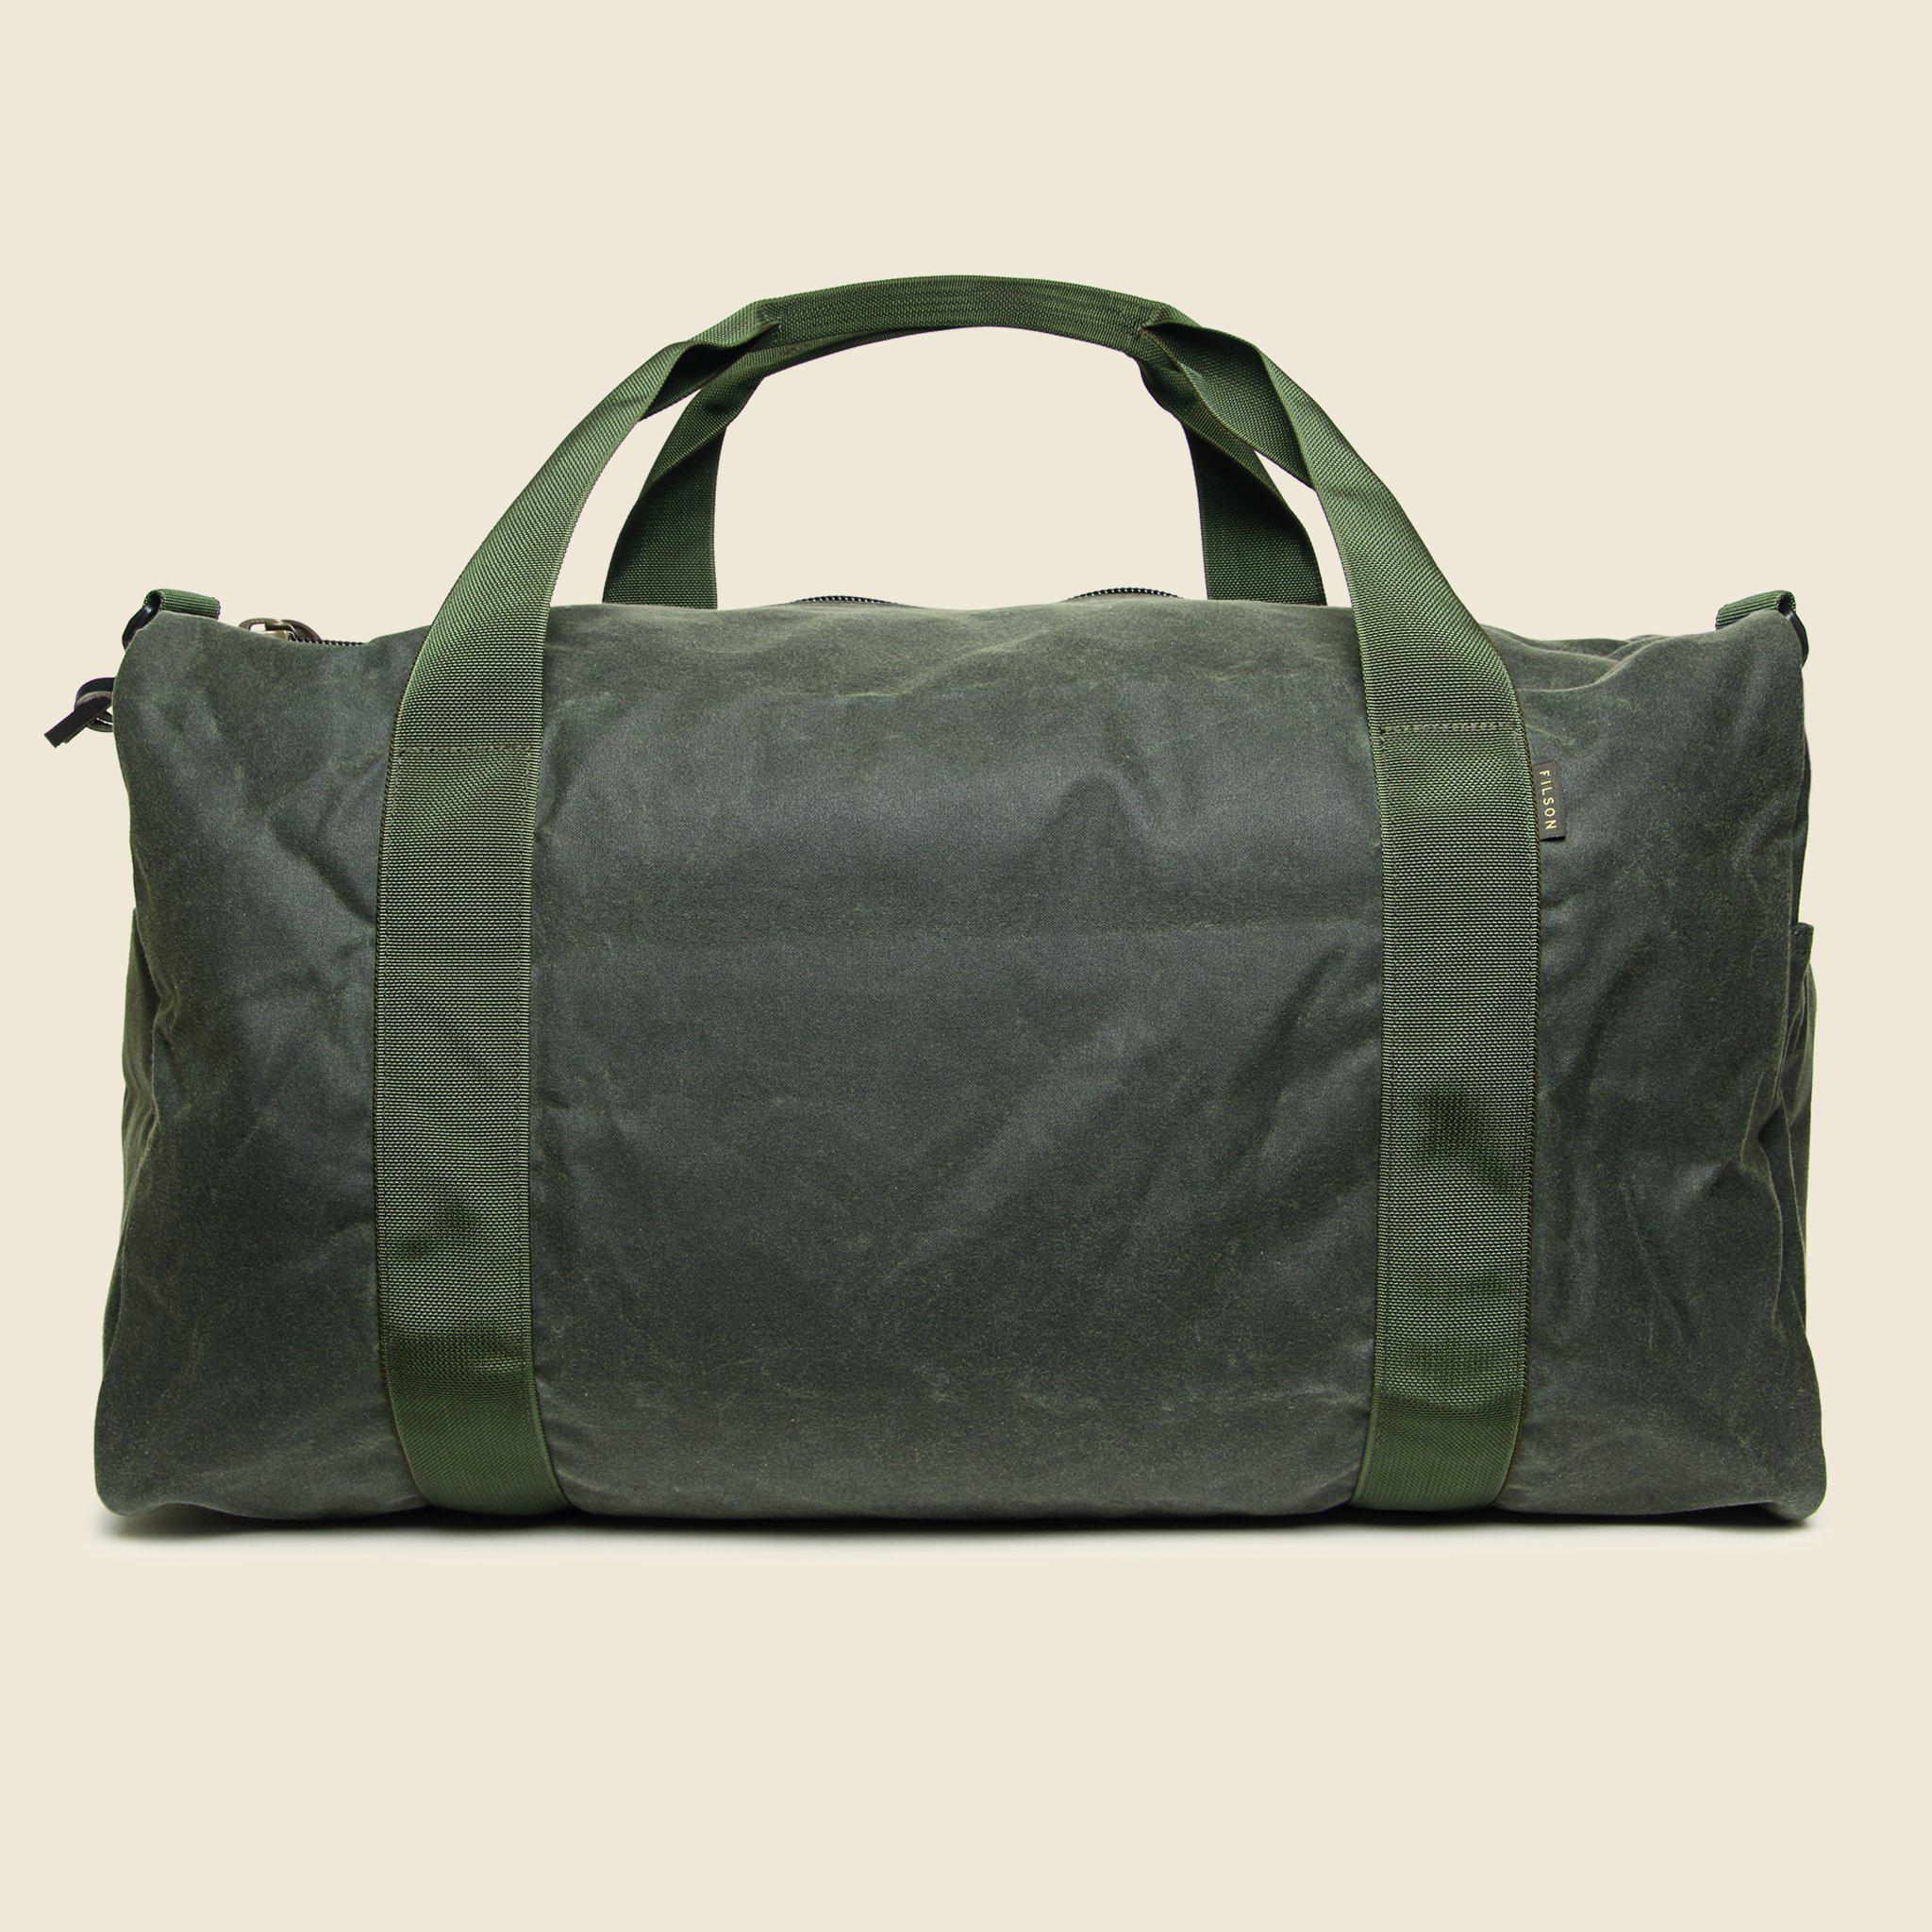 Filson Medium Field Duffle Bag - Spruce in Green for Men - Lyst